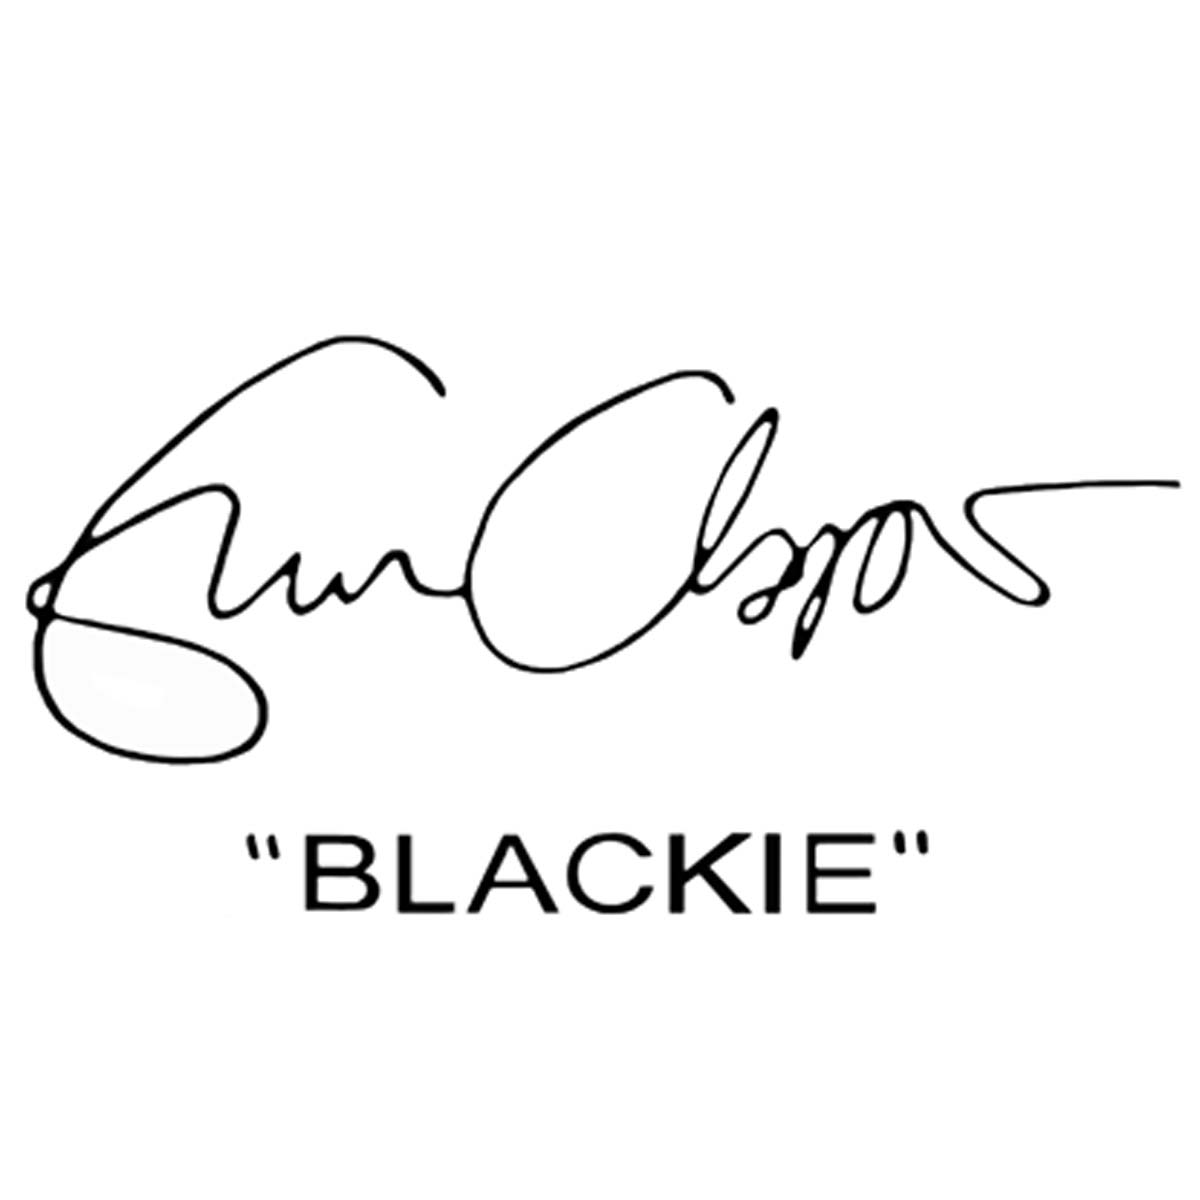 Eric Clapton Blackie Headstock Signature Waterslide Decal